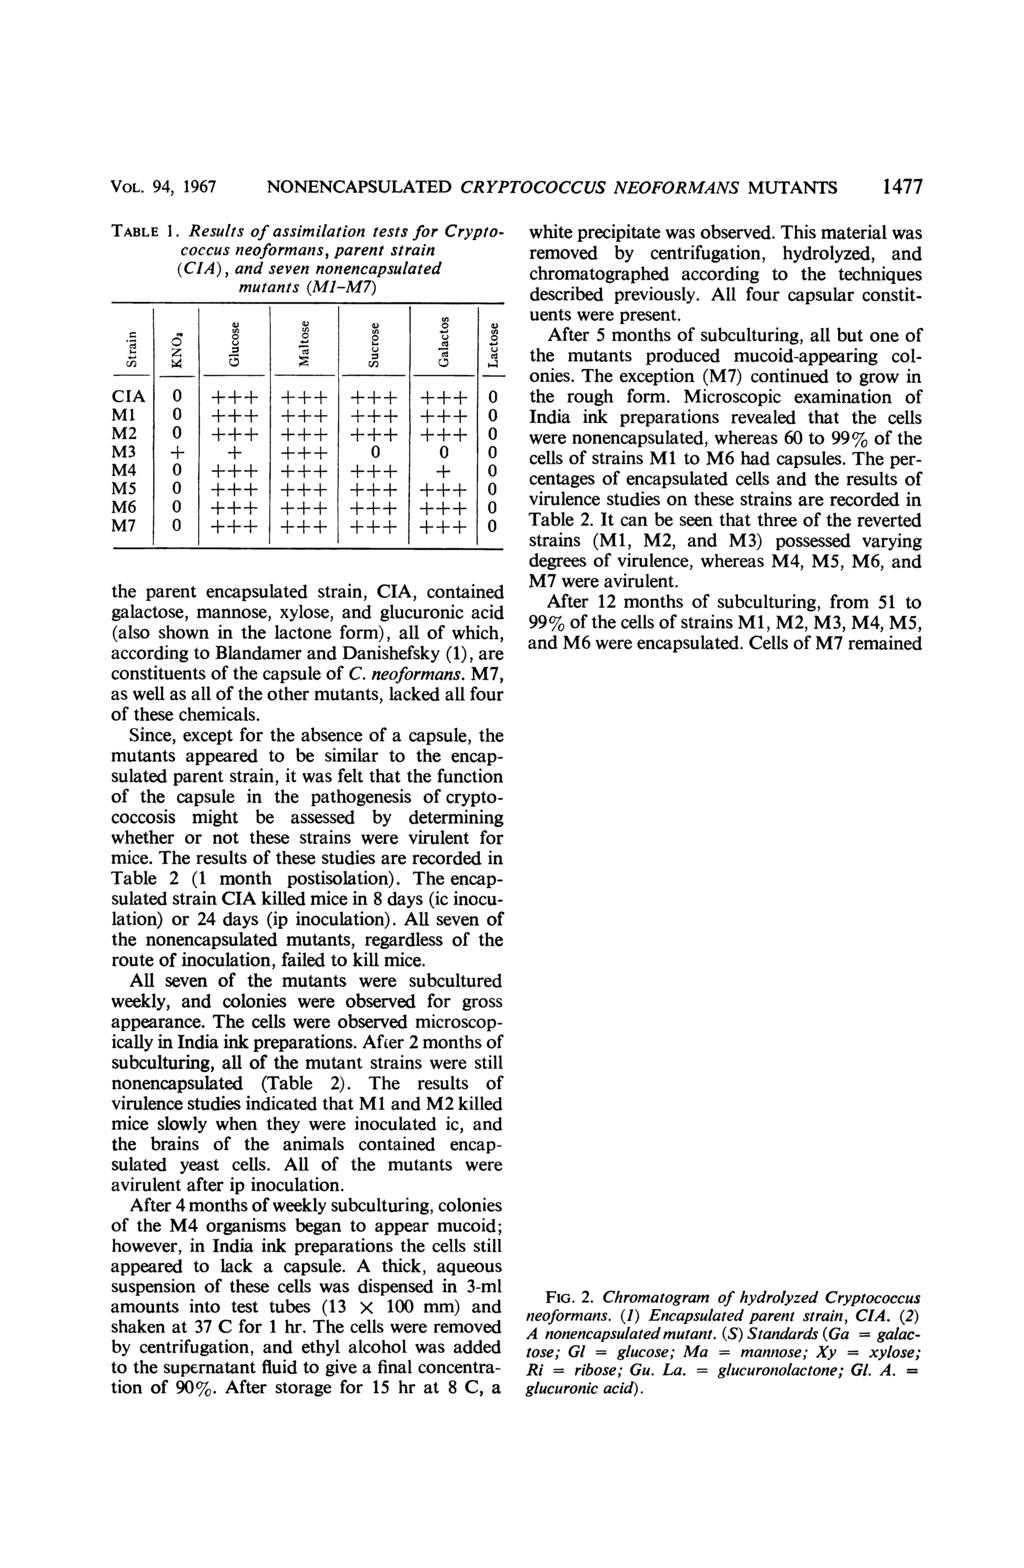 VOL. 94, 1967 NONENCAPSULATED CRYPTOCOCCUS NEOFORMANS MUTANTS 1477 TABLE 1.